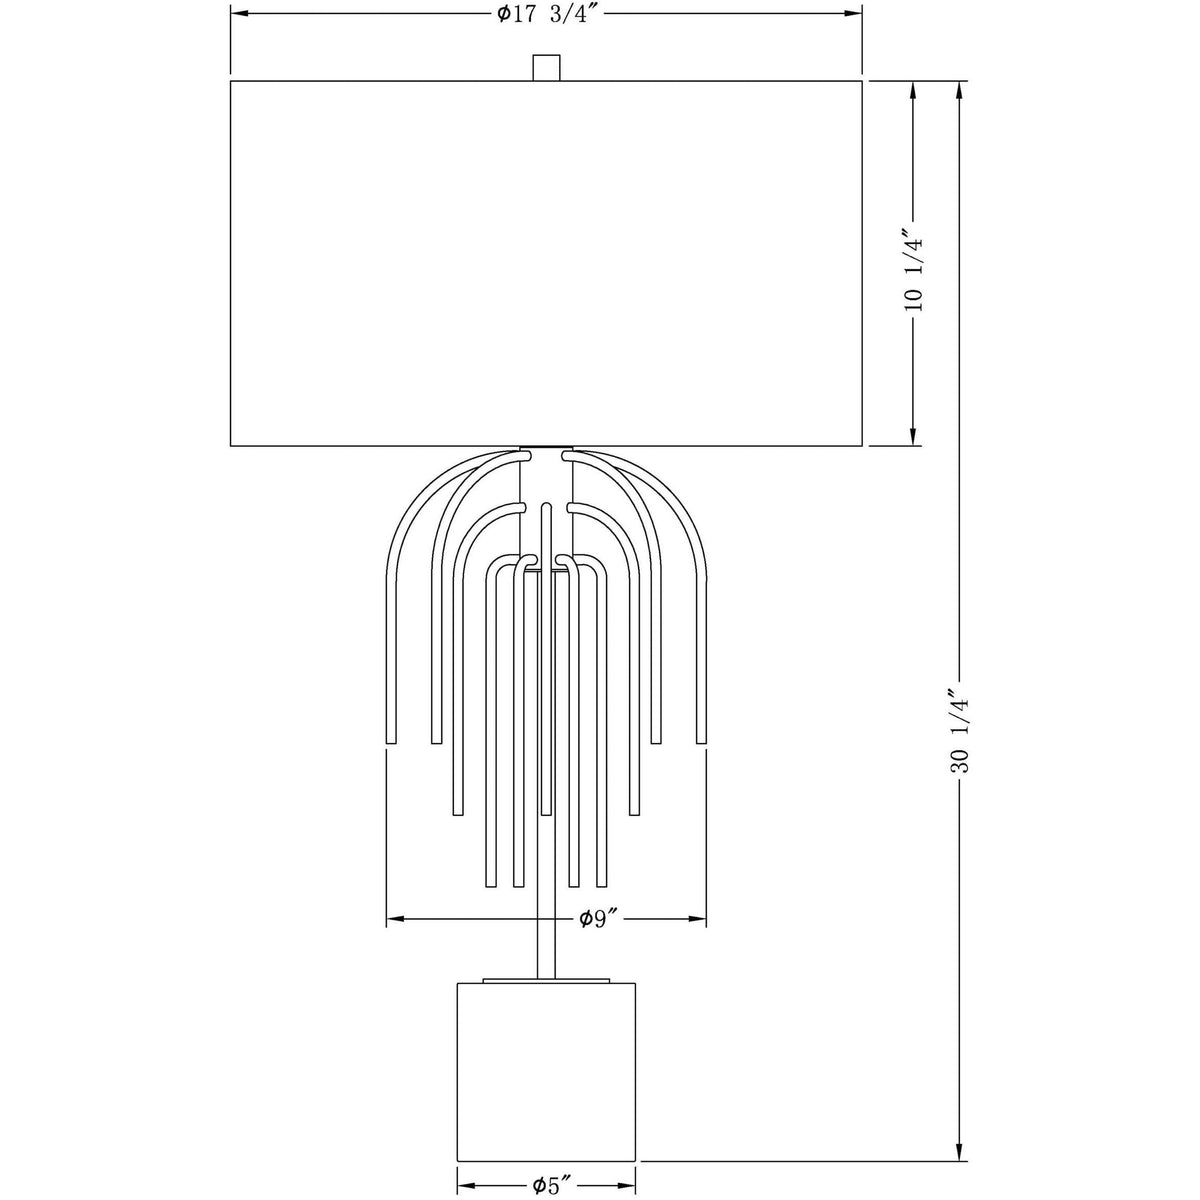 Flow Decor - Powell Table Lamp - 4439 | Montreal Lighting & Hardware